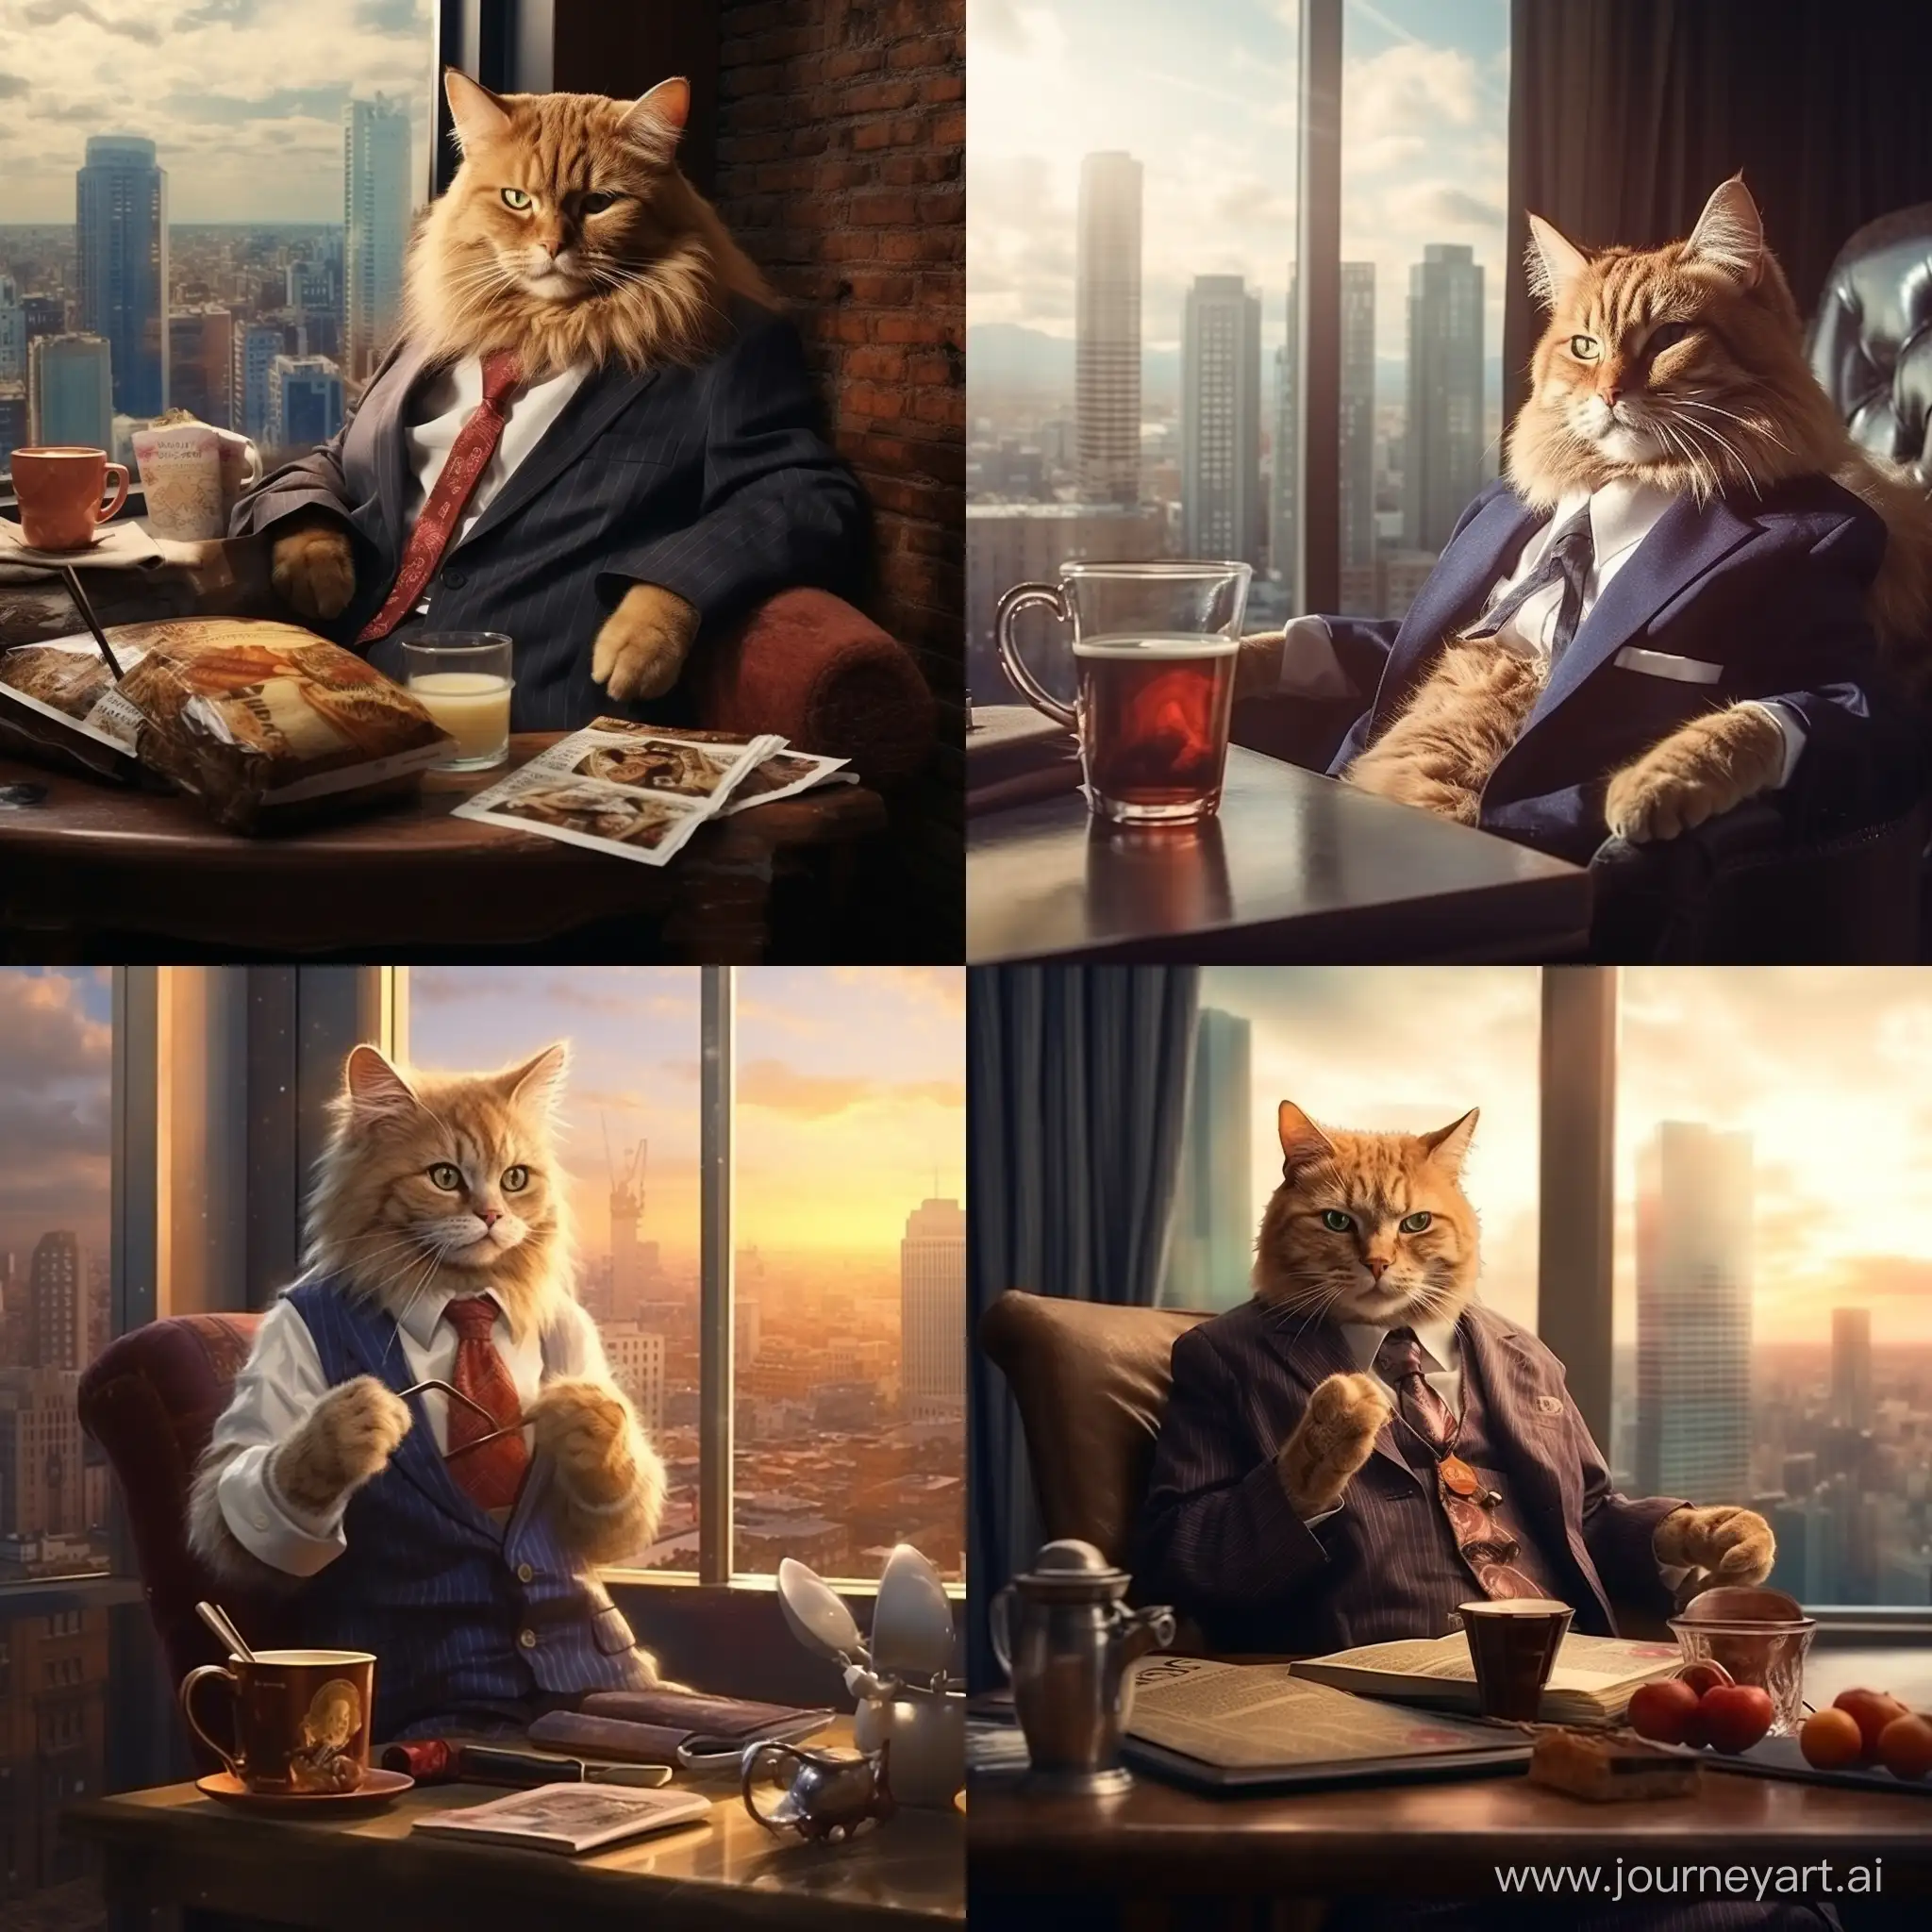 Stern-Feline-Businessman-Sipping-Tea-in-Skyhigh-Office